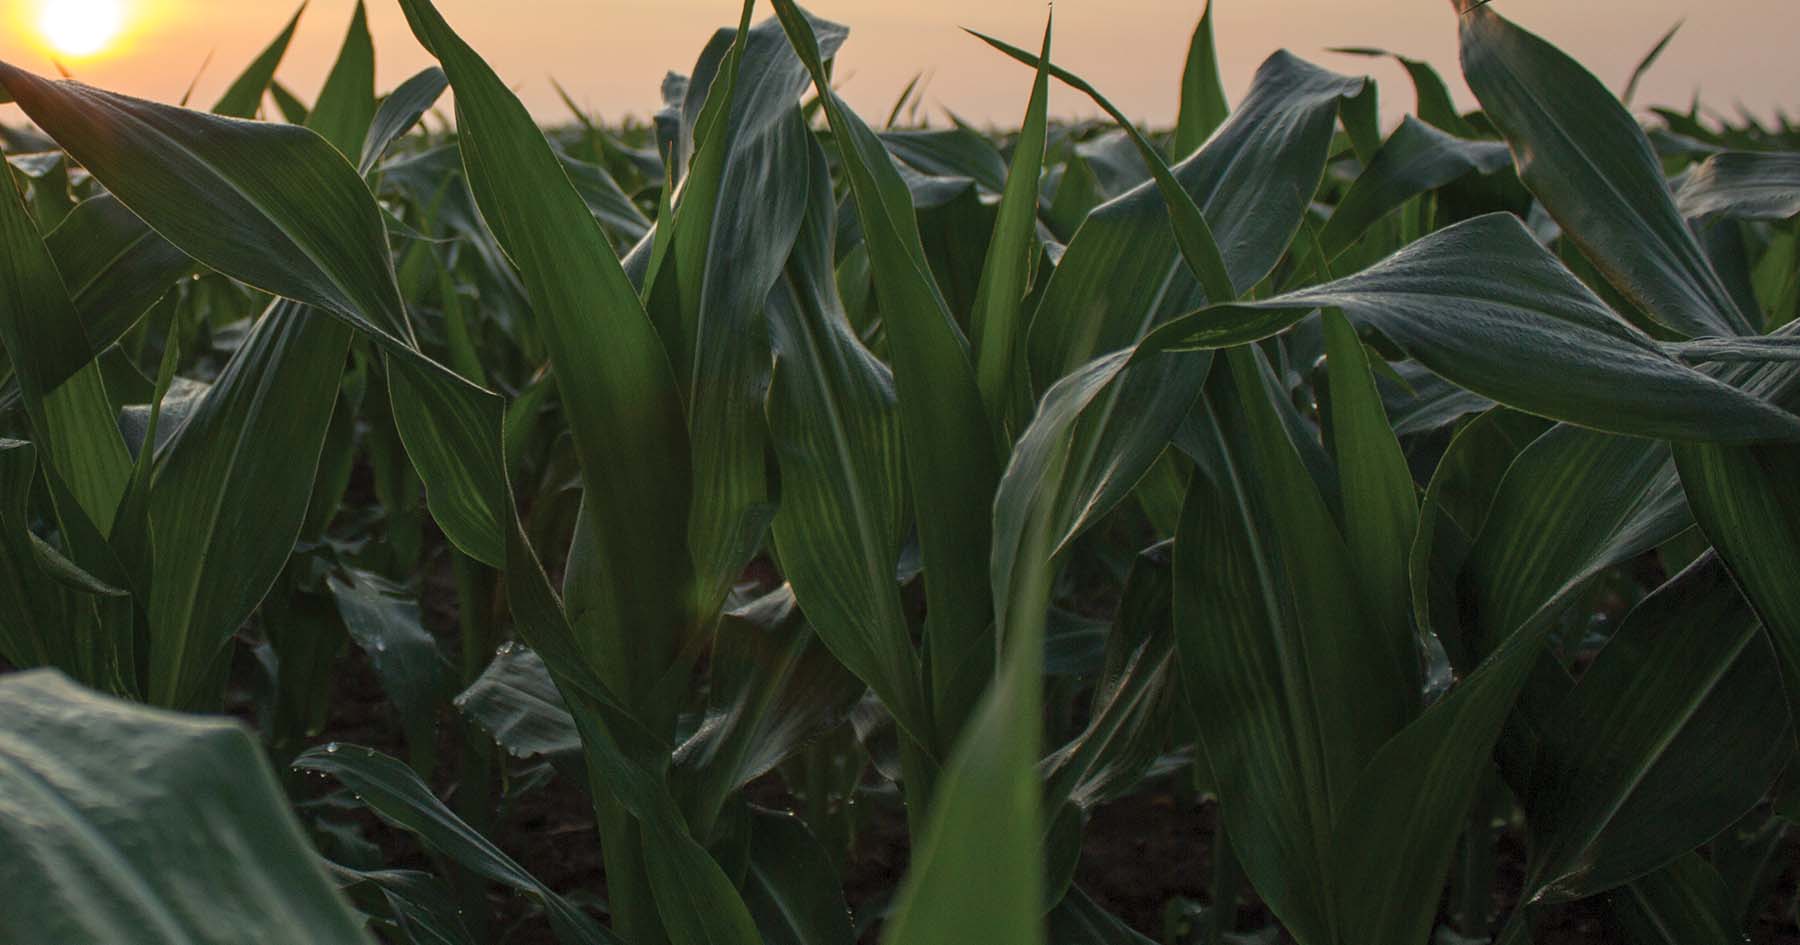 field of corn at sunset